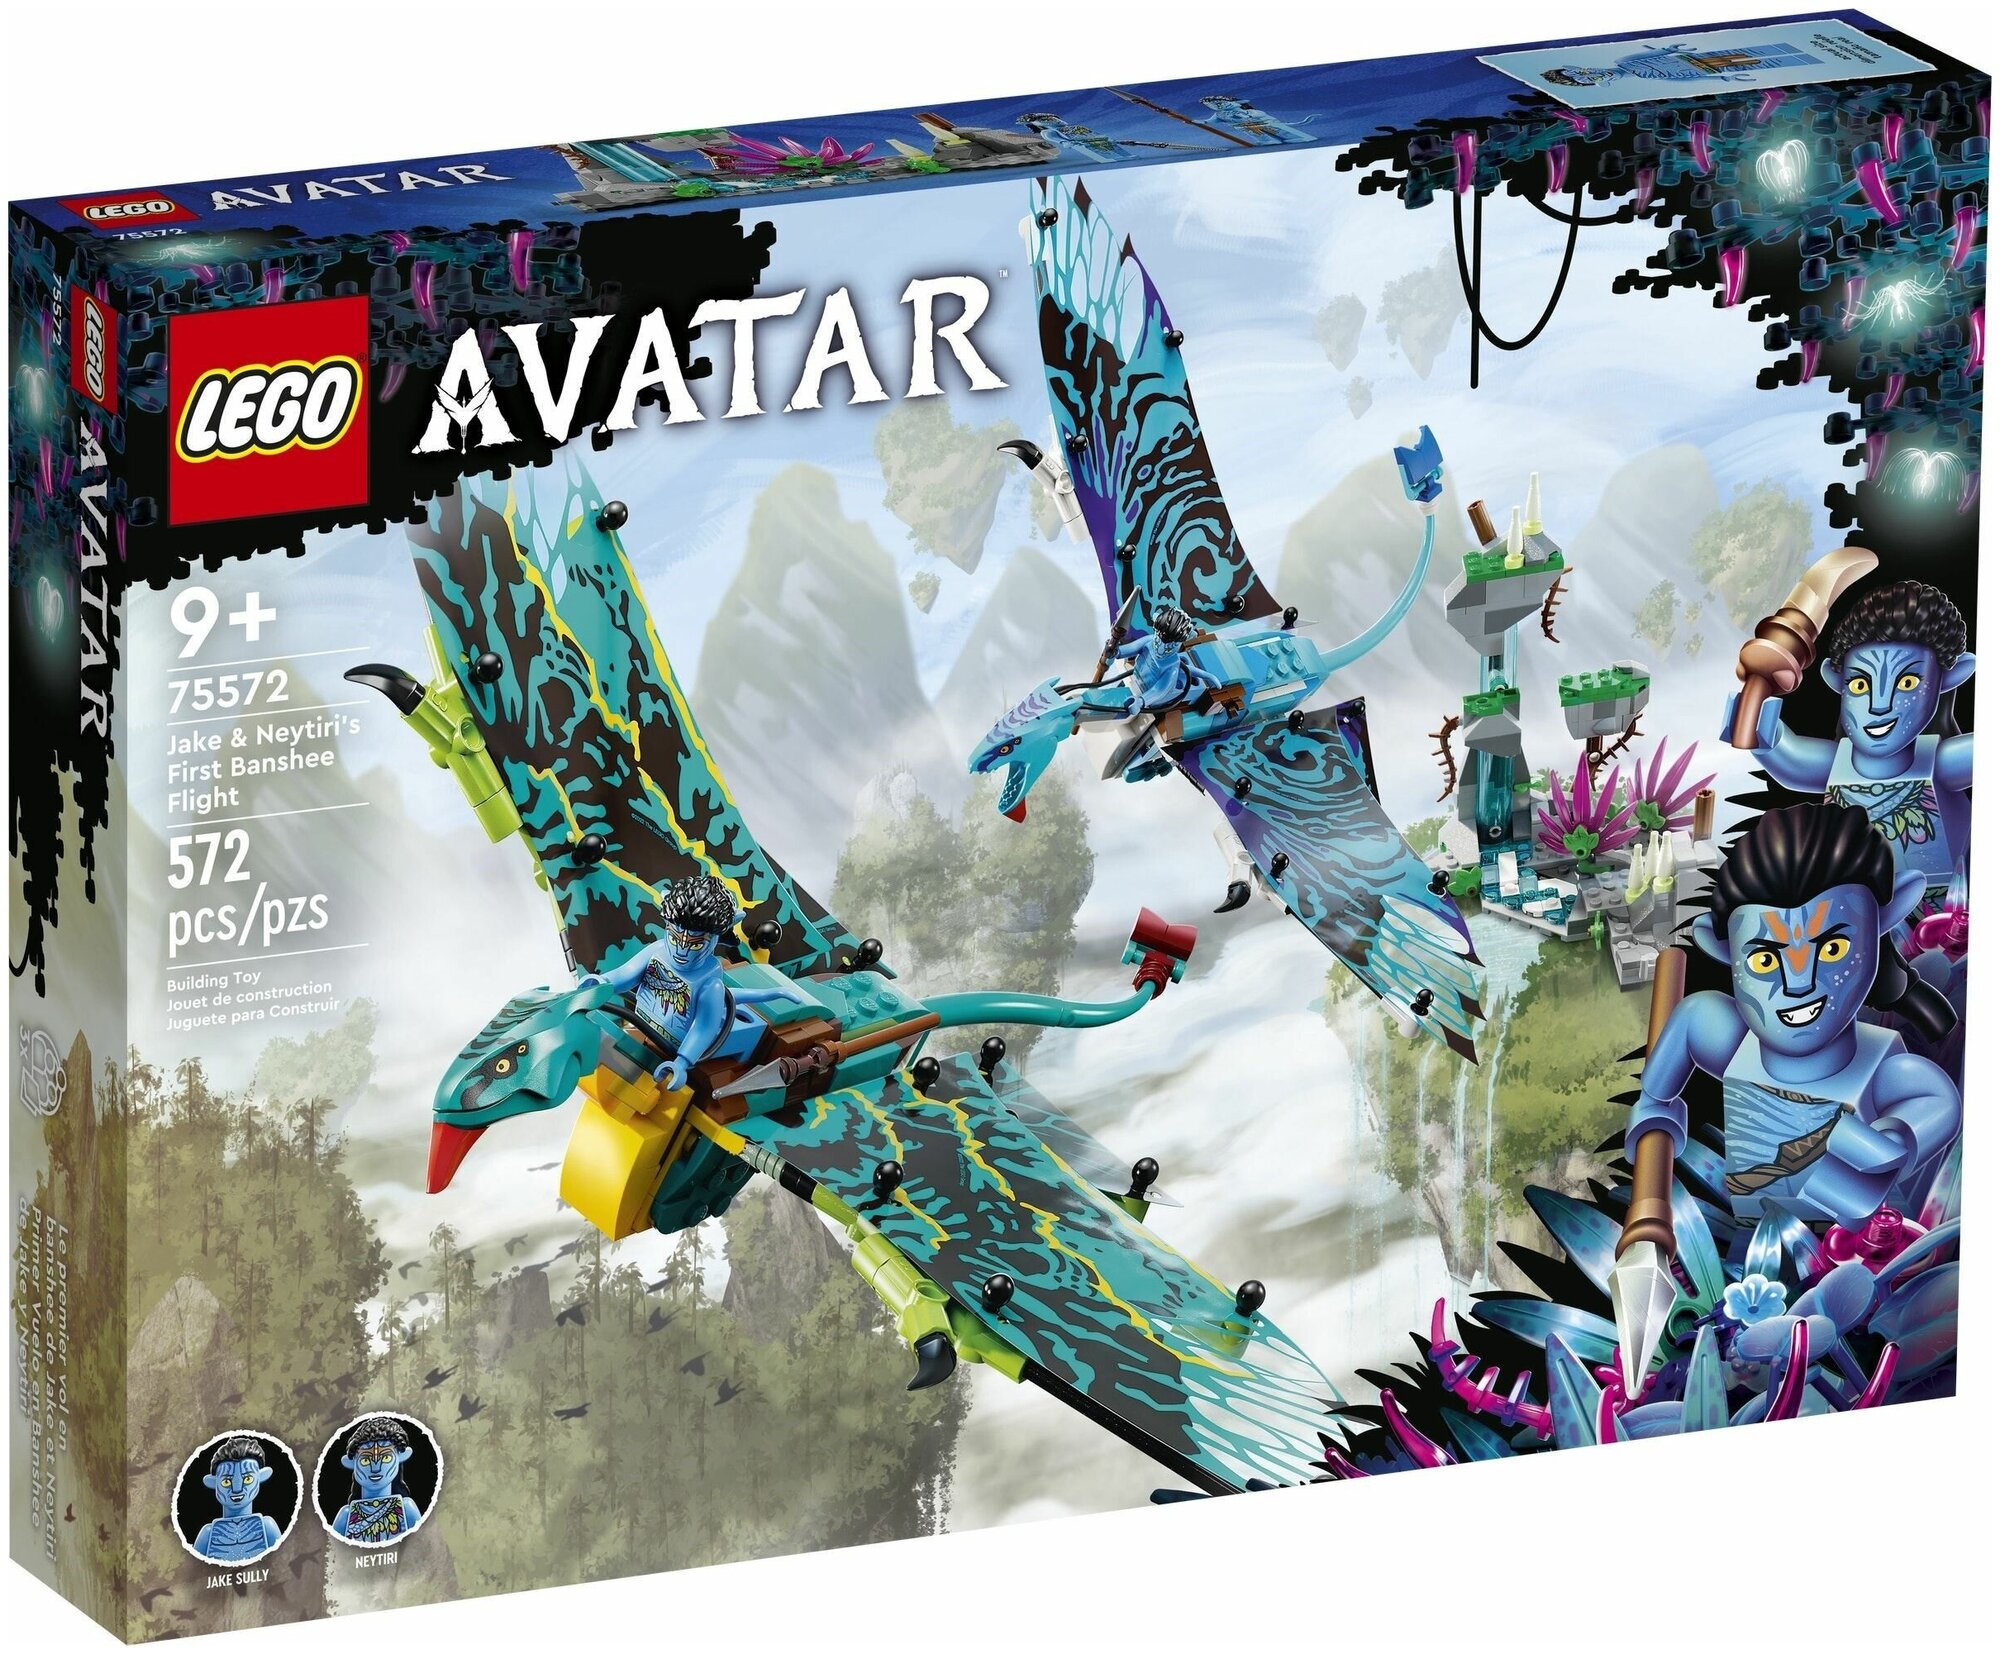 Конструктор LEGO Avatar, Jake & Neytiri’s First Banshee Flight 75572